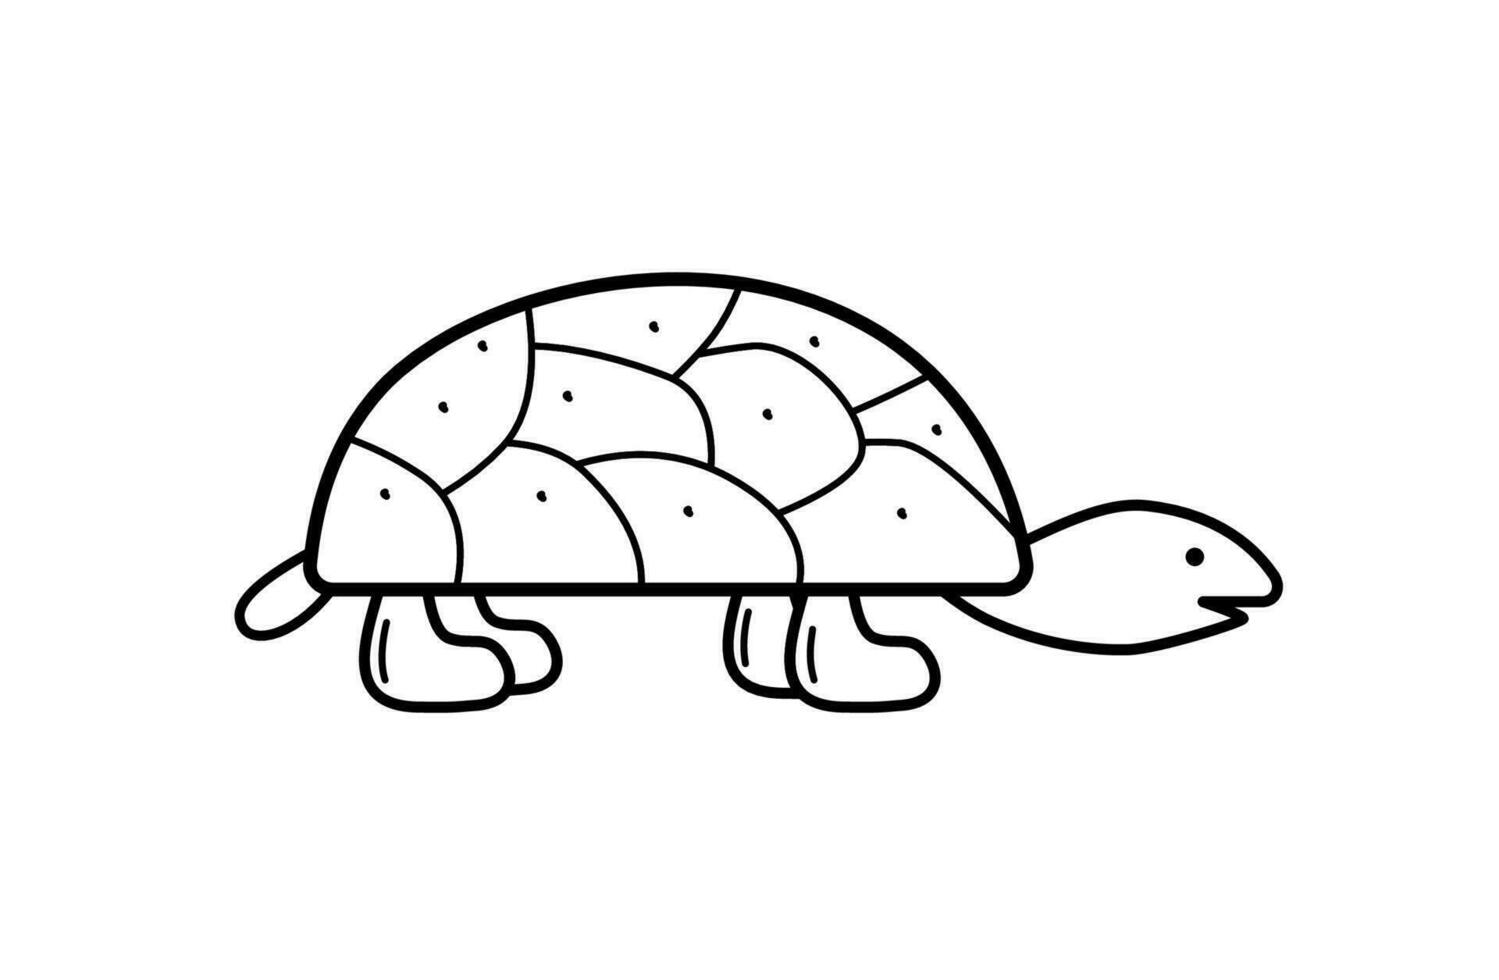 tortue icône. vecteur griffonnage illustration de une mer animal tortue. isoler sur blanche.